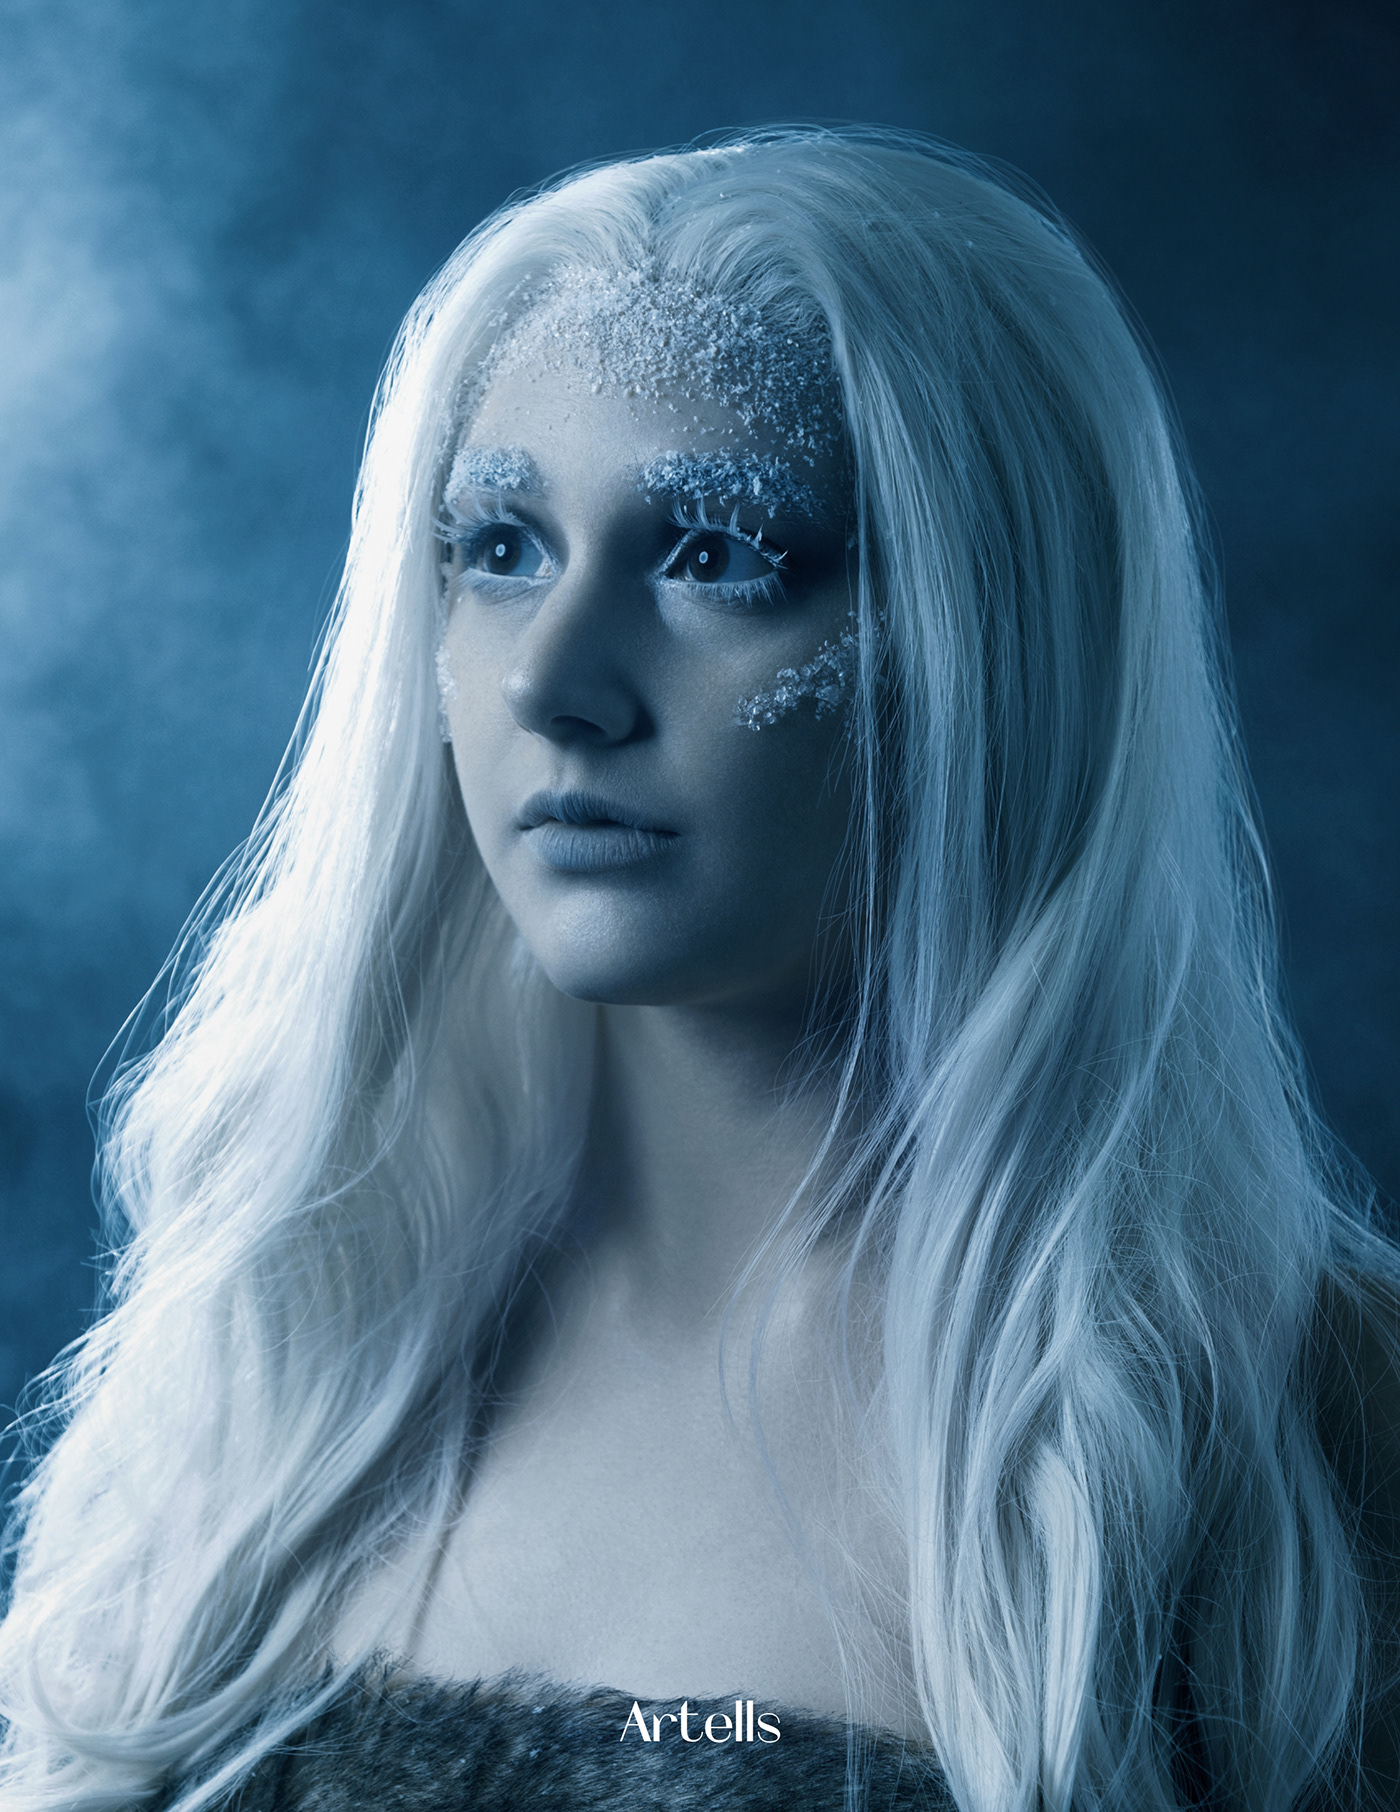 magazine retouch portrait Ice queen winter Editing Photo retouching  artells ARTELLS MAGAZINE creative makeup